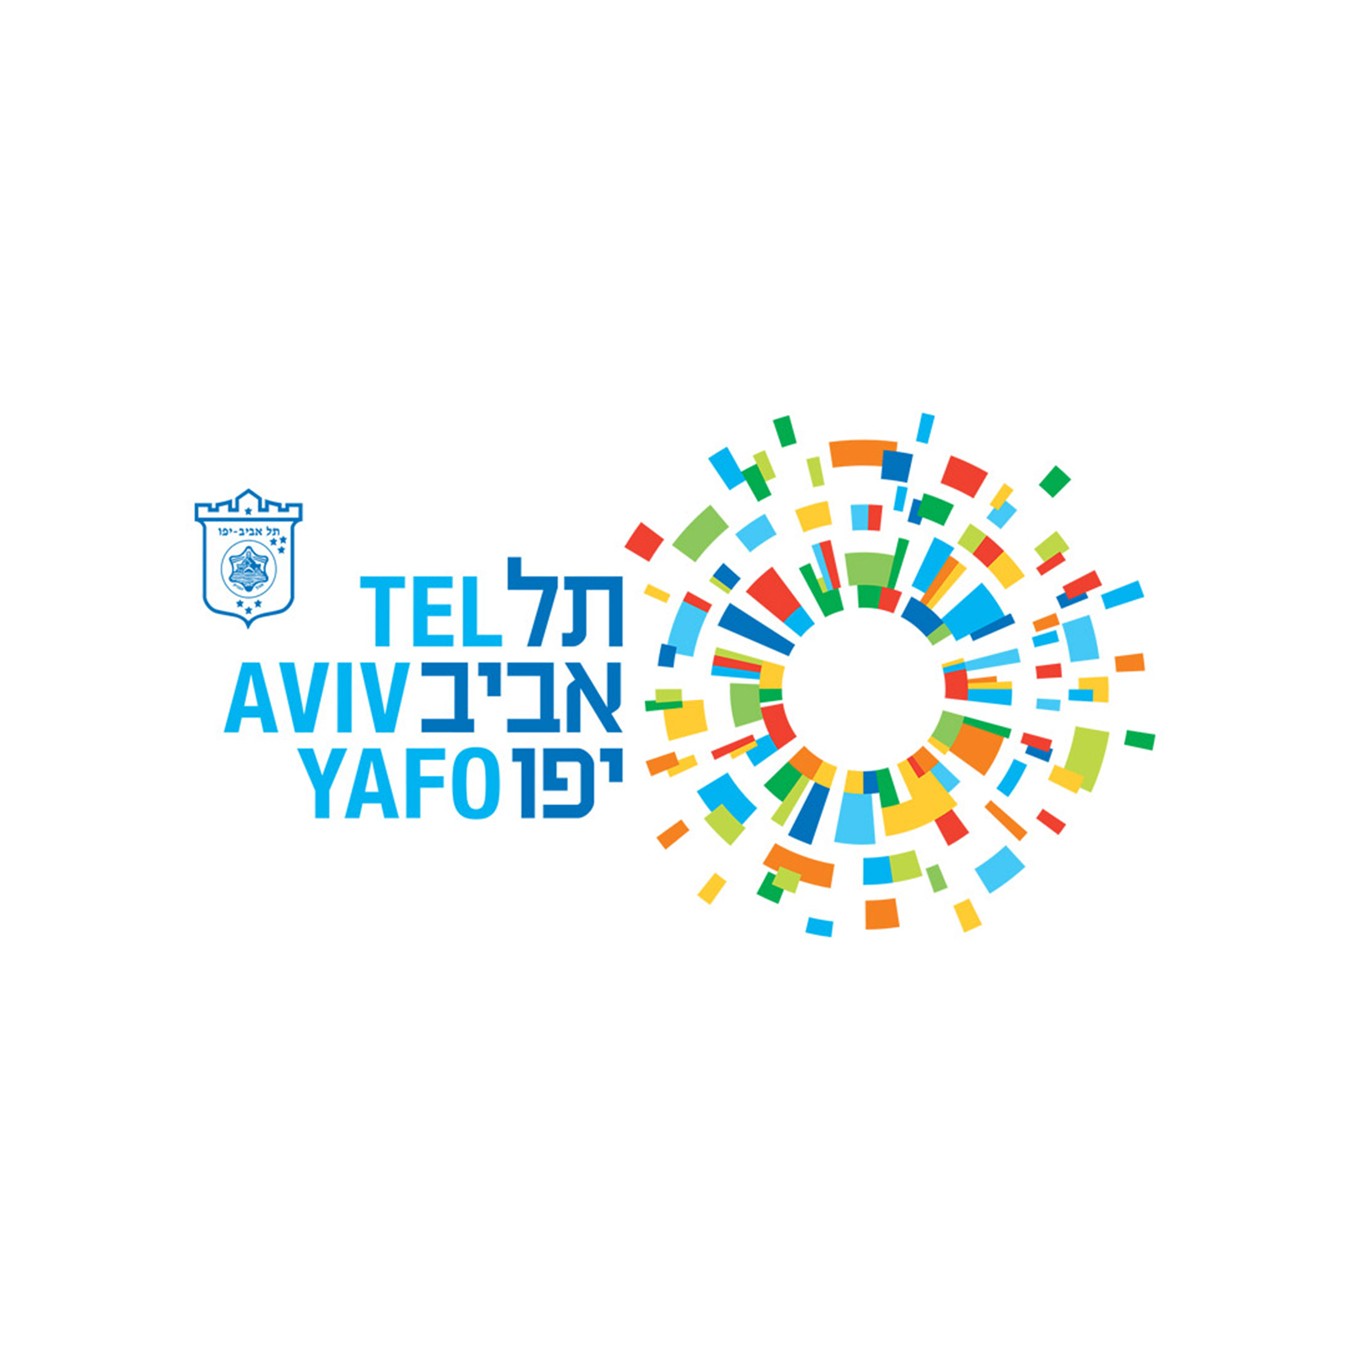 City of Tel Aviv - Yafo 